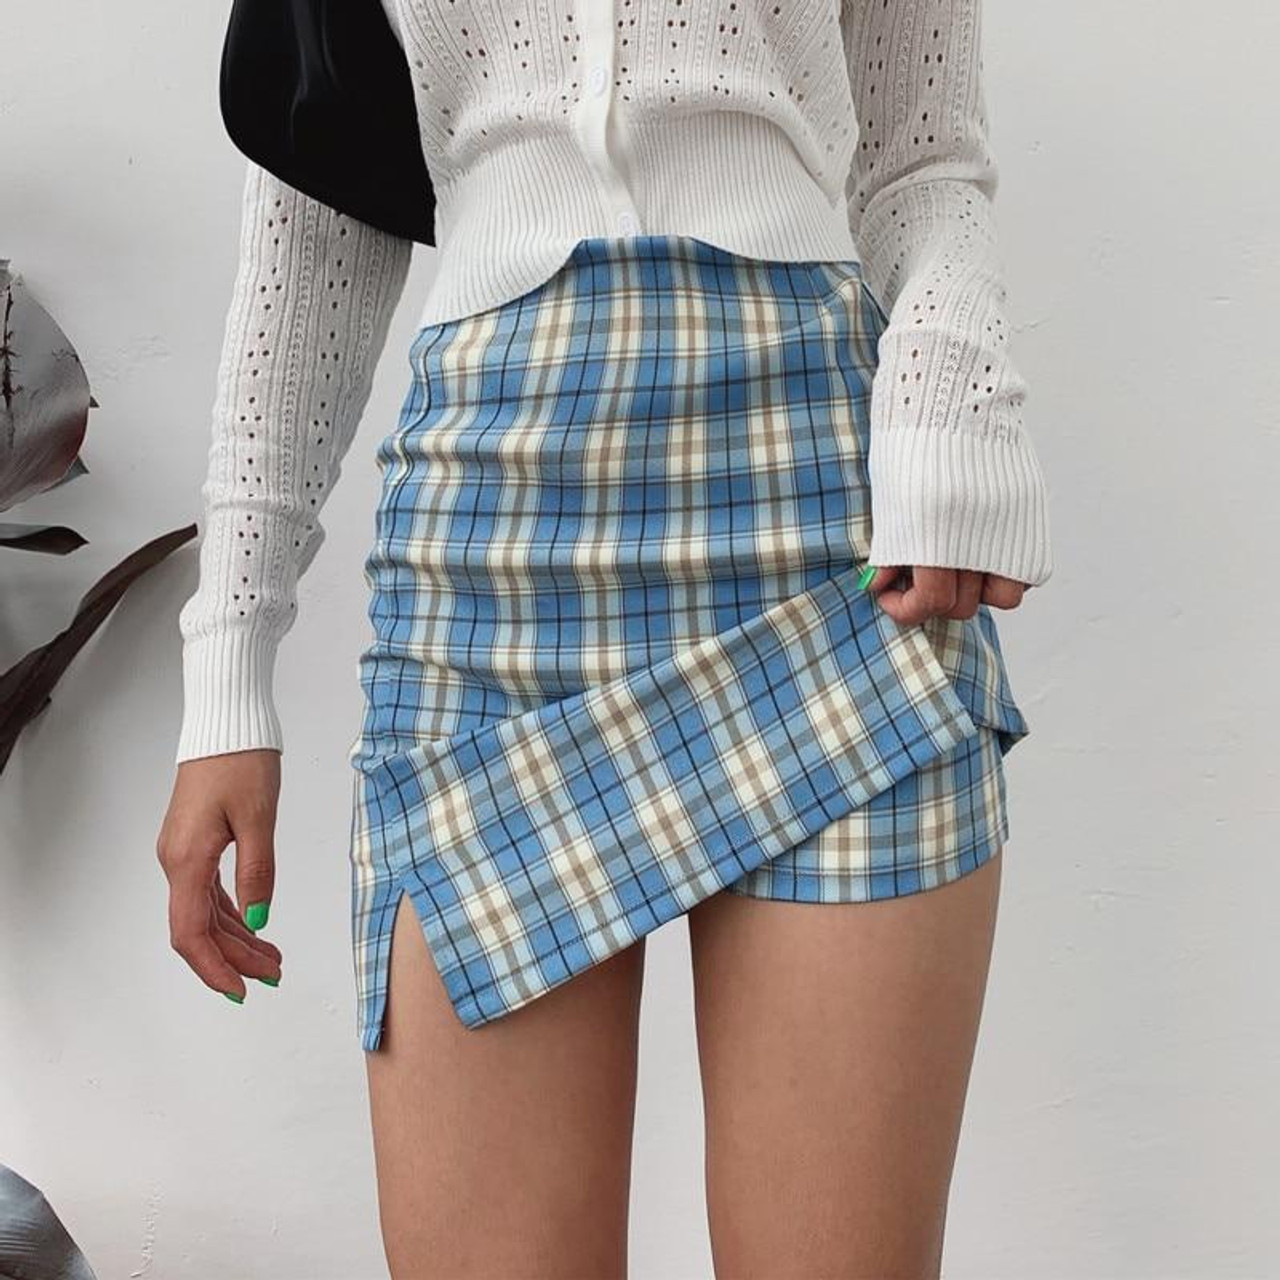 Women Seamless Safety Short Pants Under Skirt Shorts Modal Elastic Short  Tights 